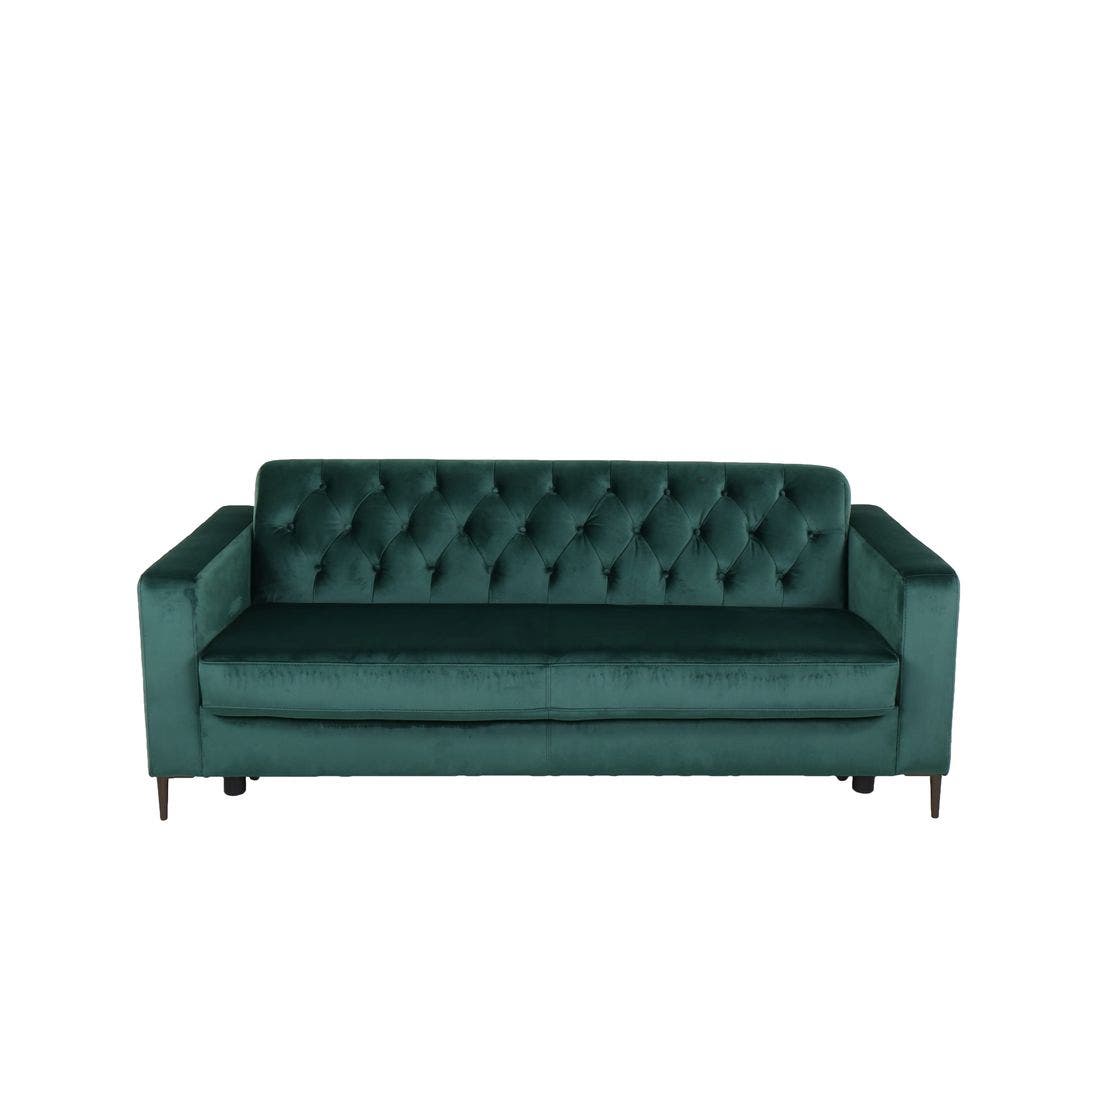 19197060-filipino-furniture-sofa-recliner-sofa-beds-function-01